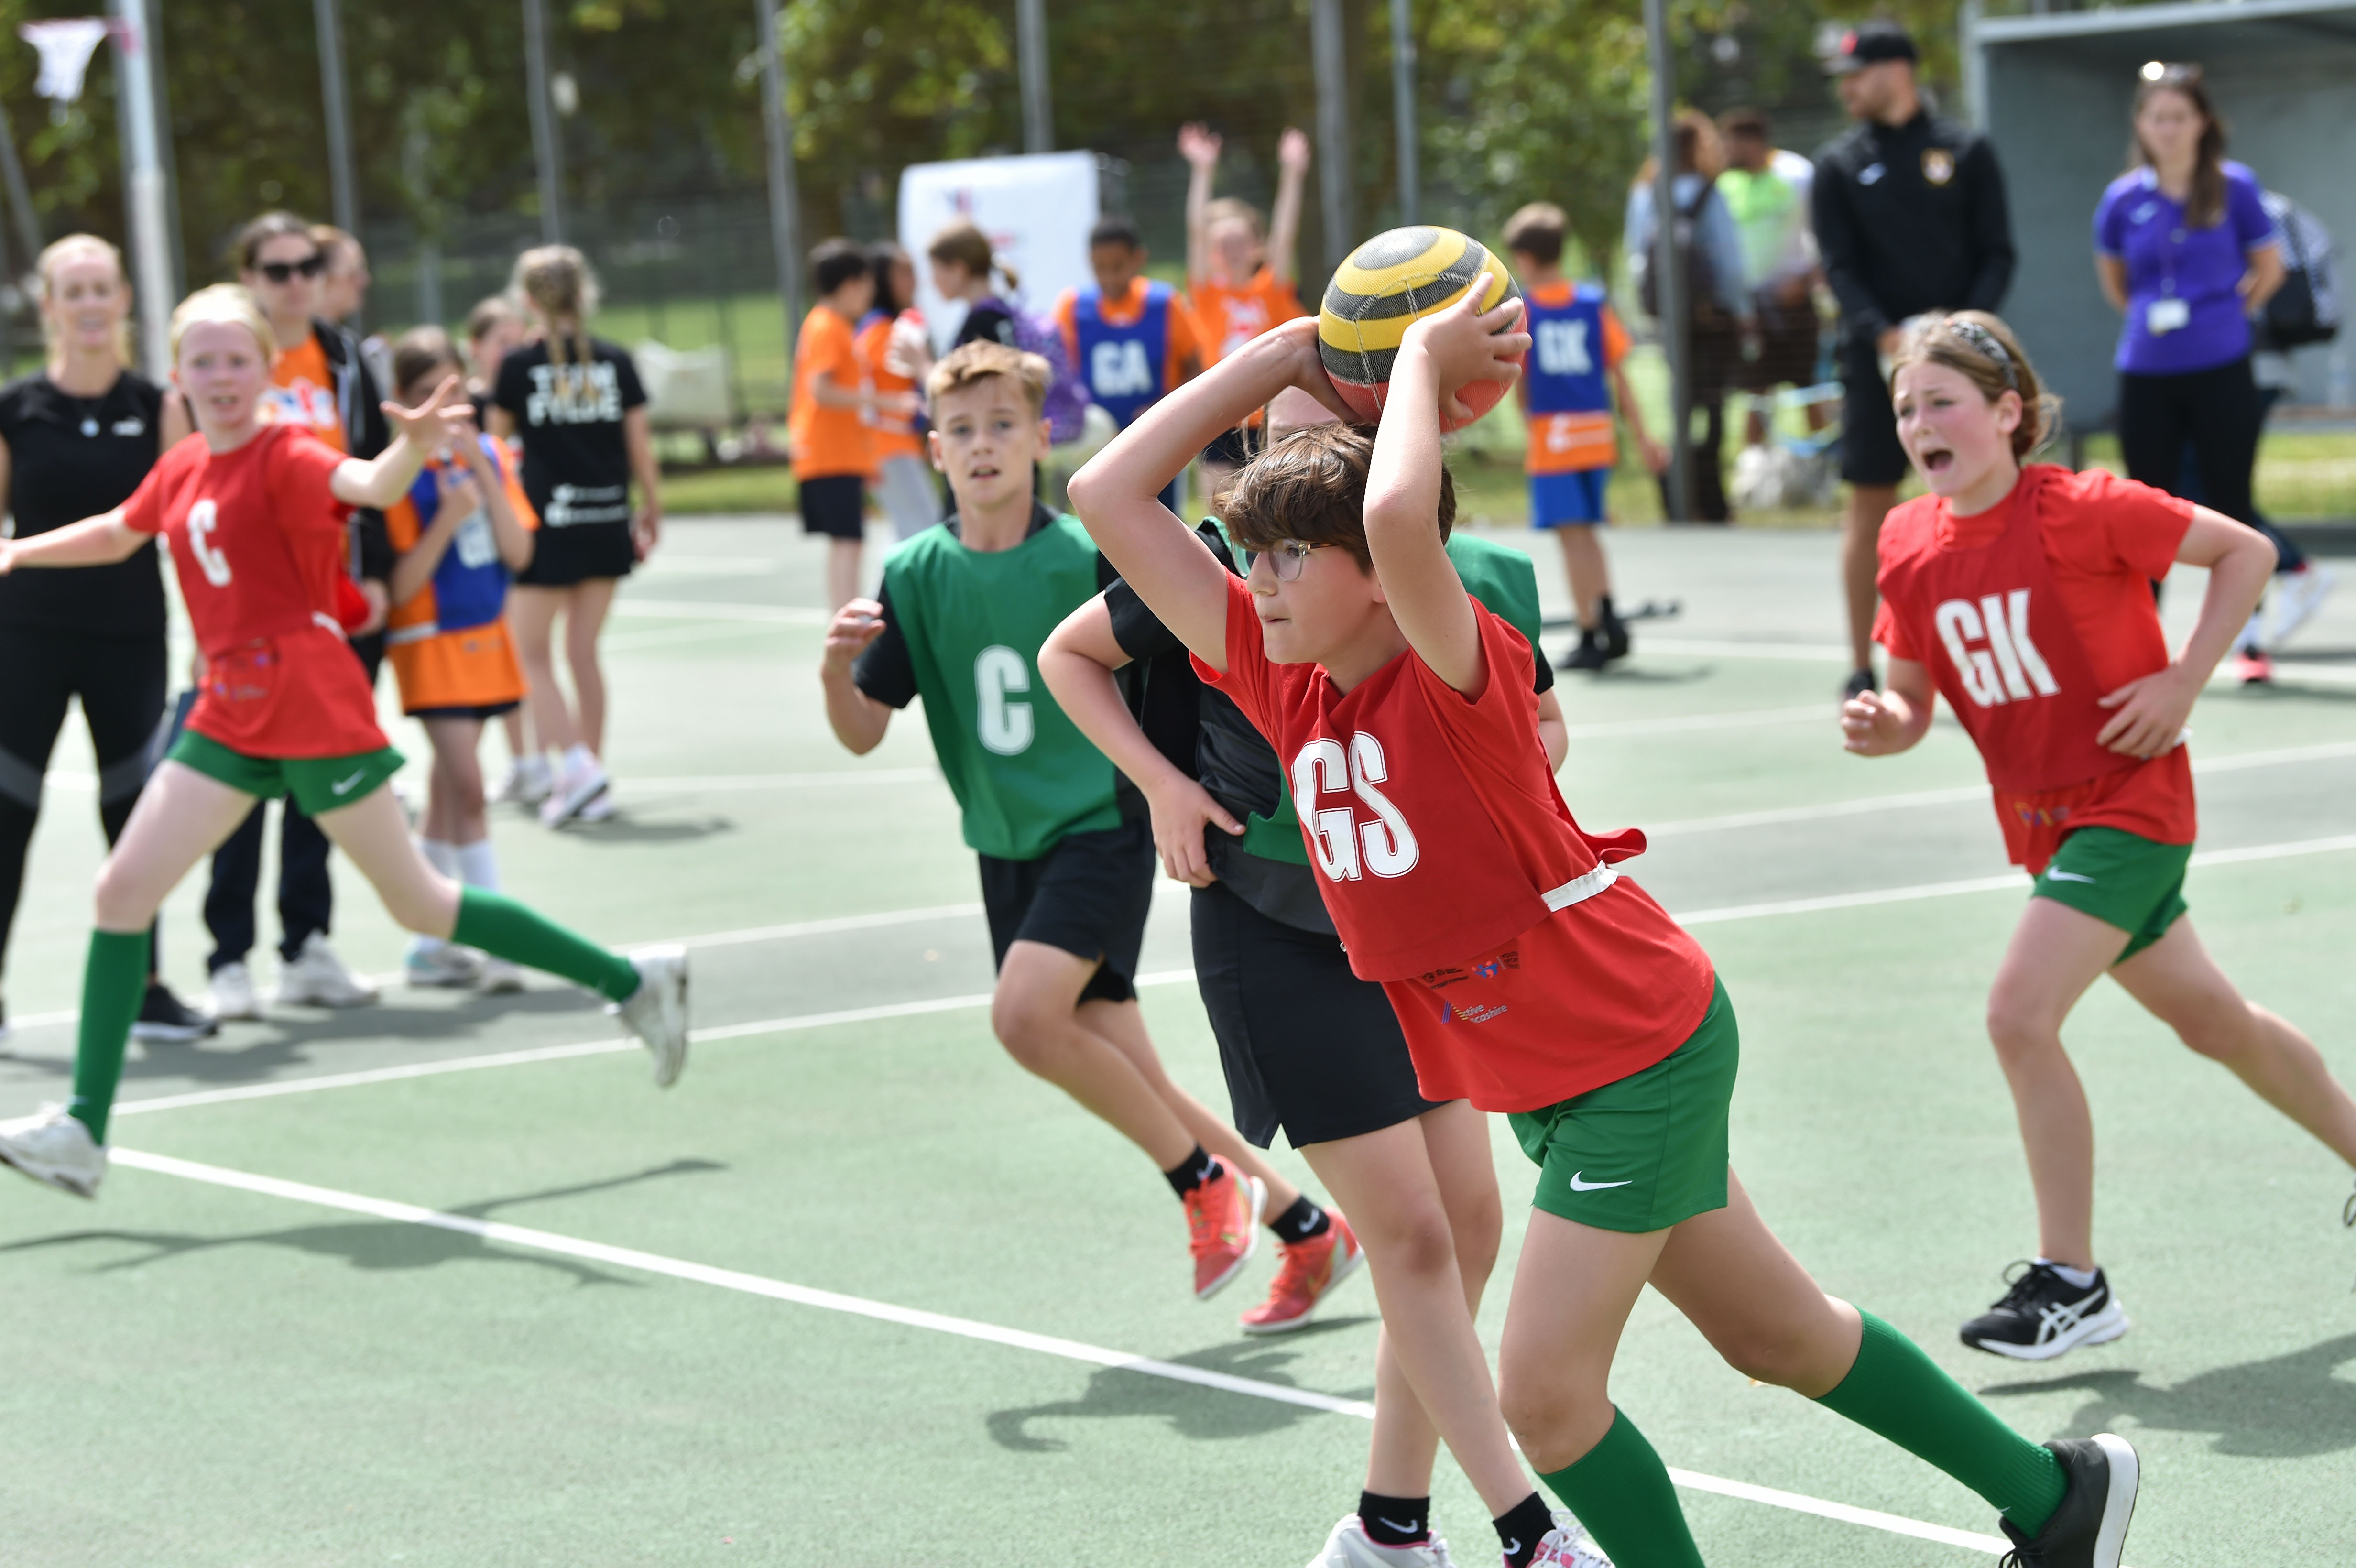 Lancashire School Games - Chorley v Fylde netball